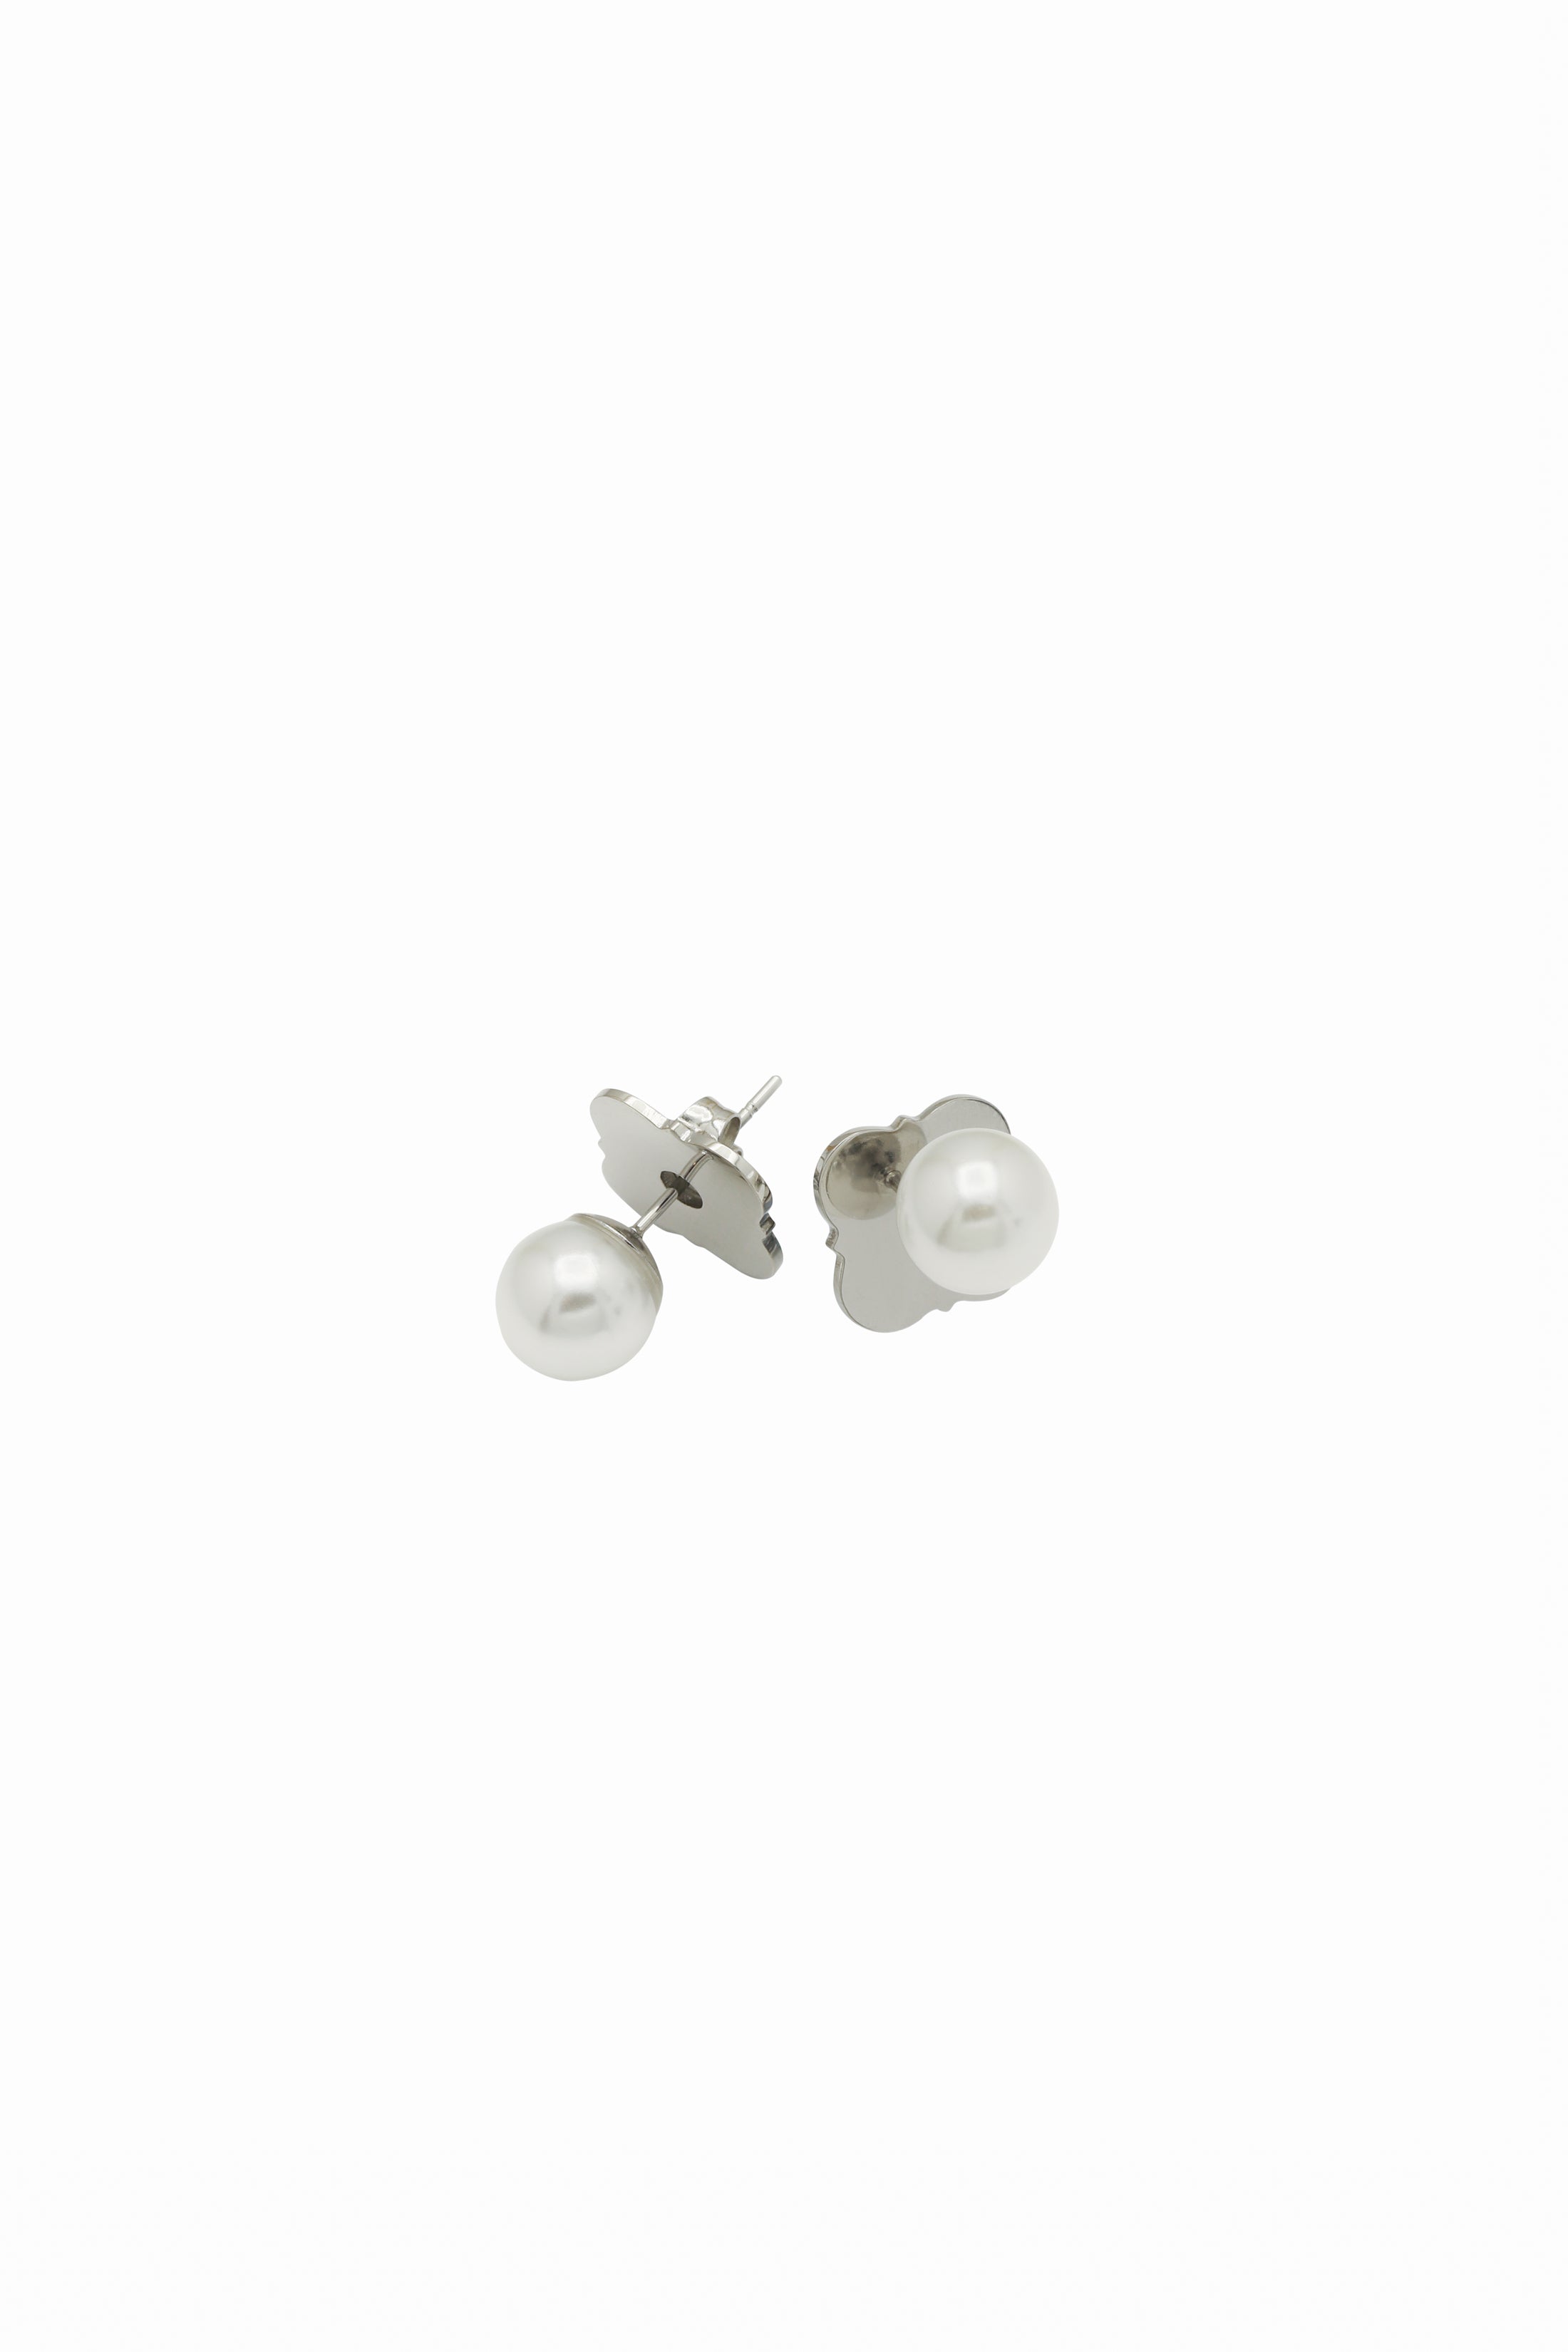 Silver Pearl Ball Stud Earring Set